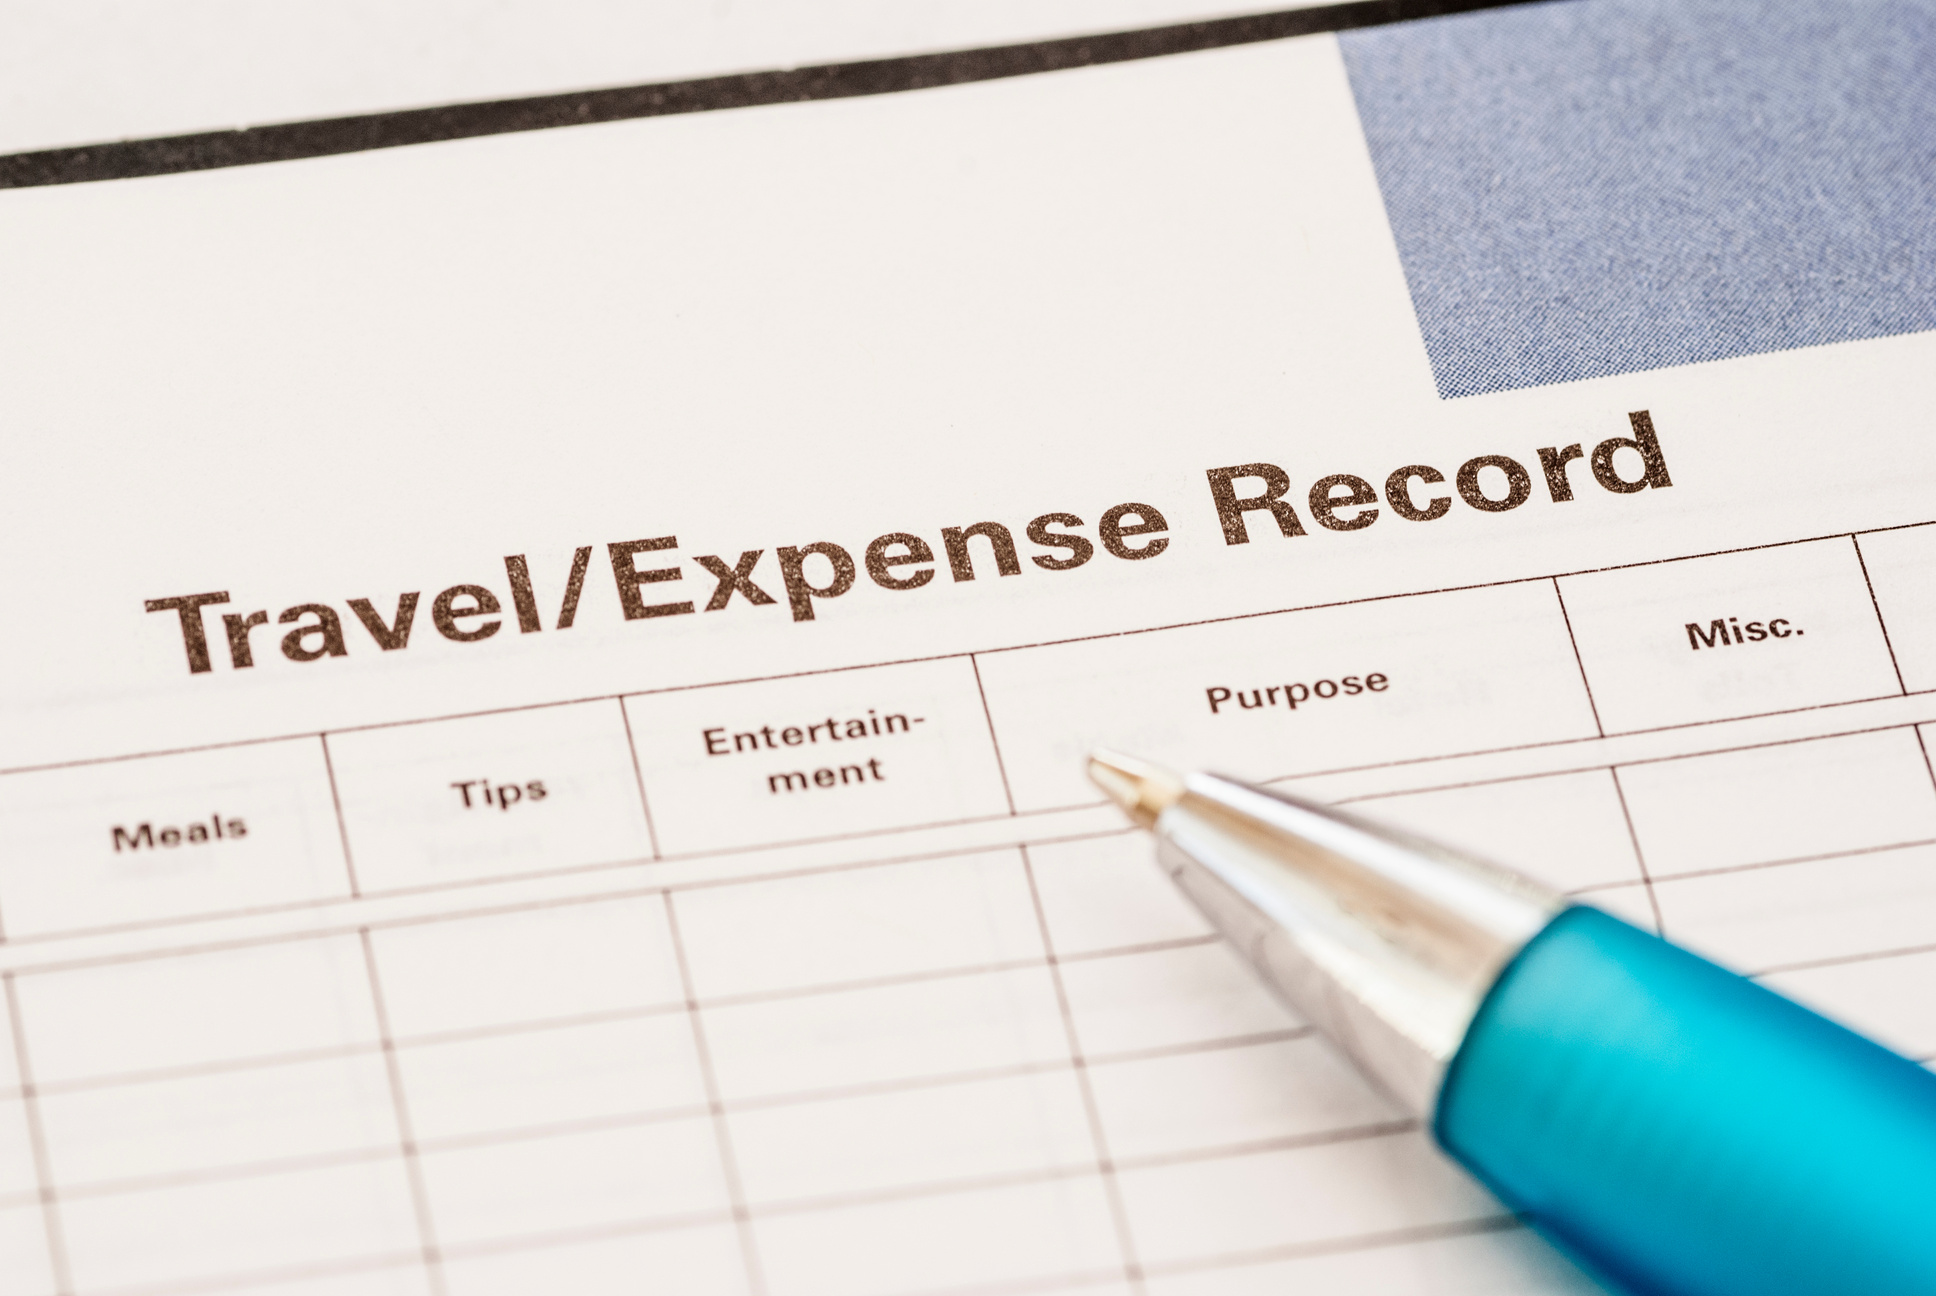 Travel expense record